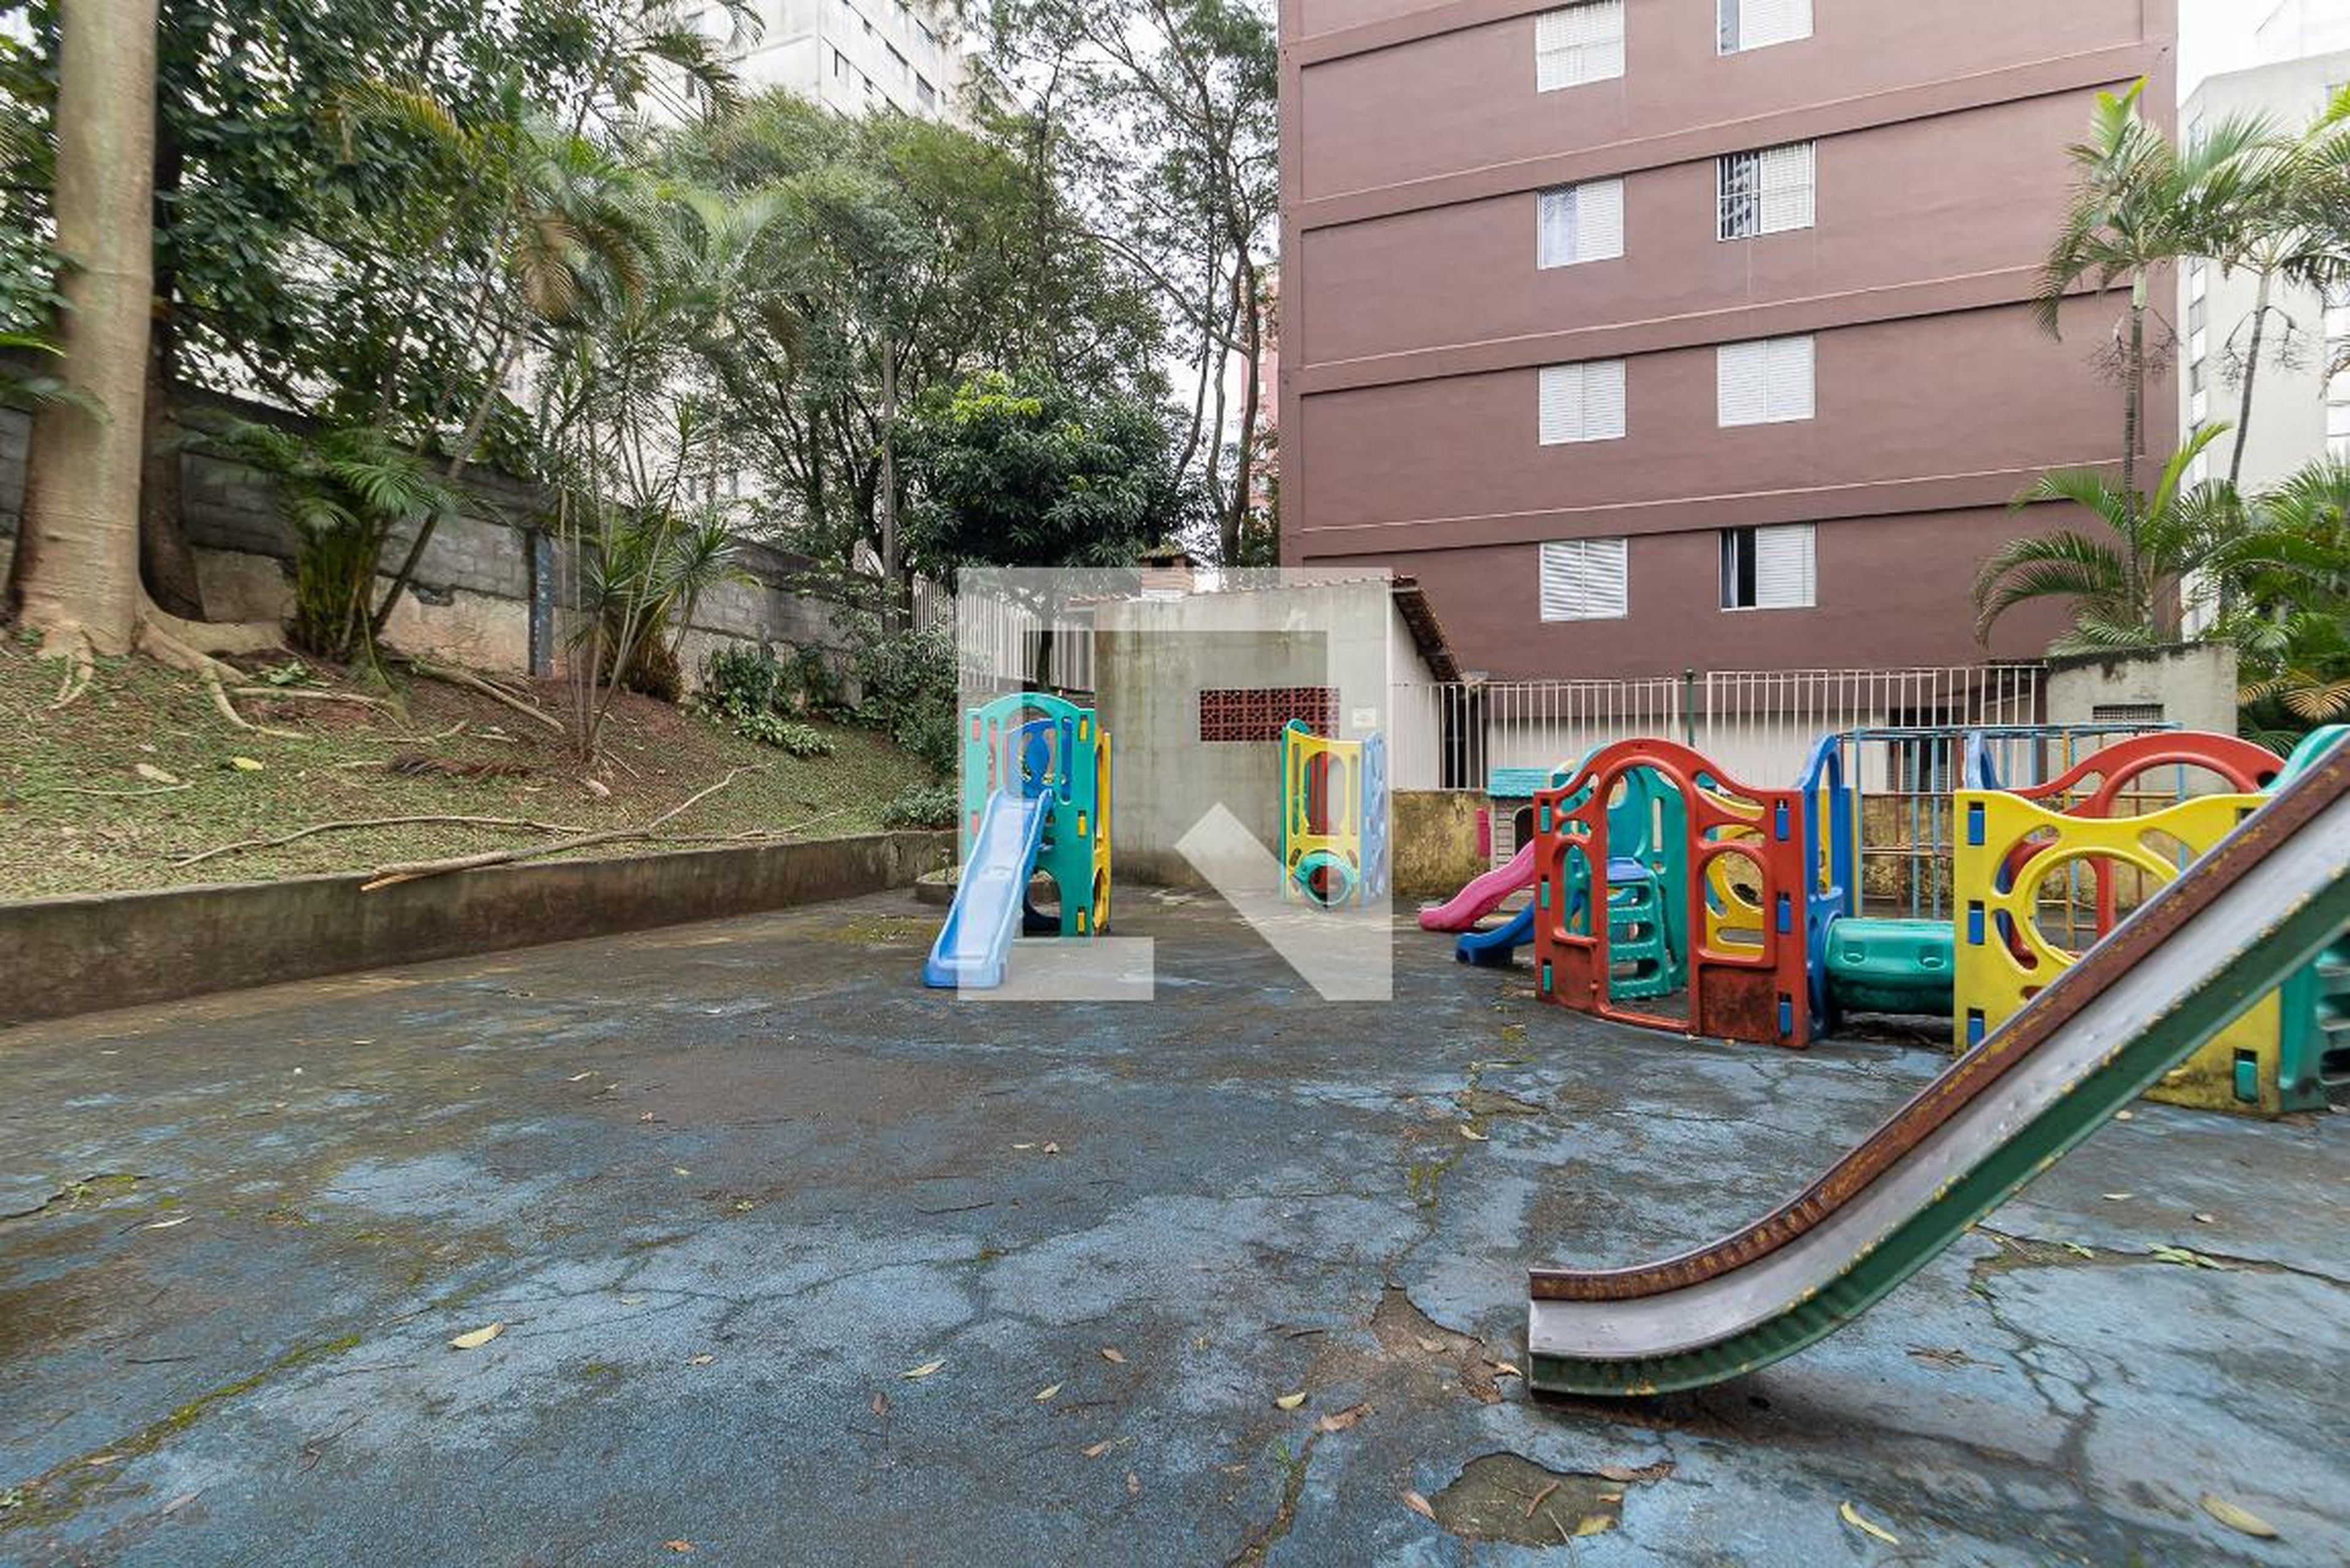 Playground - Angela Maria da Silva Corrêa Pando